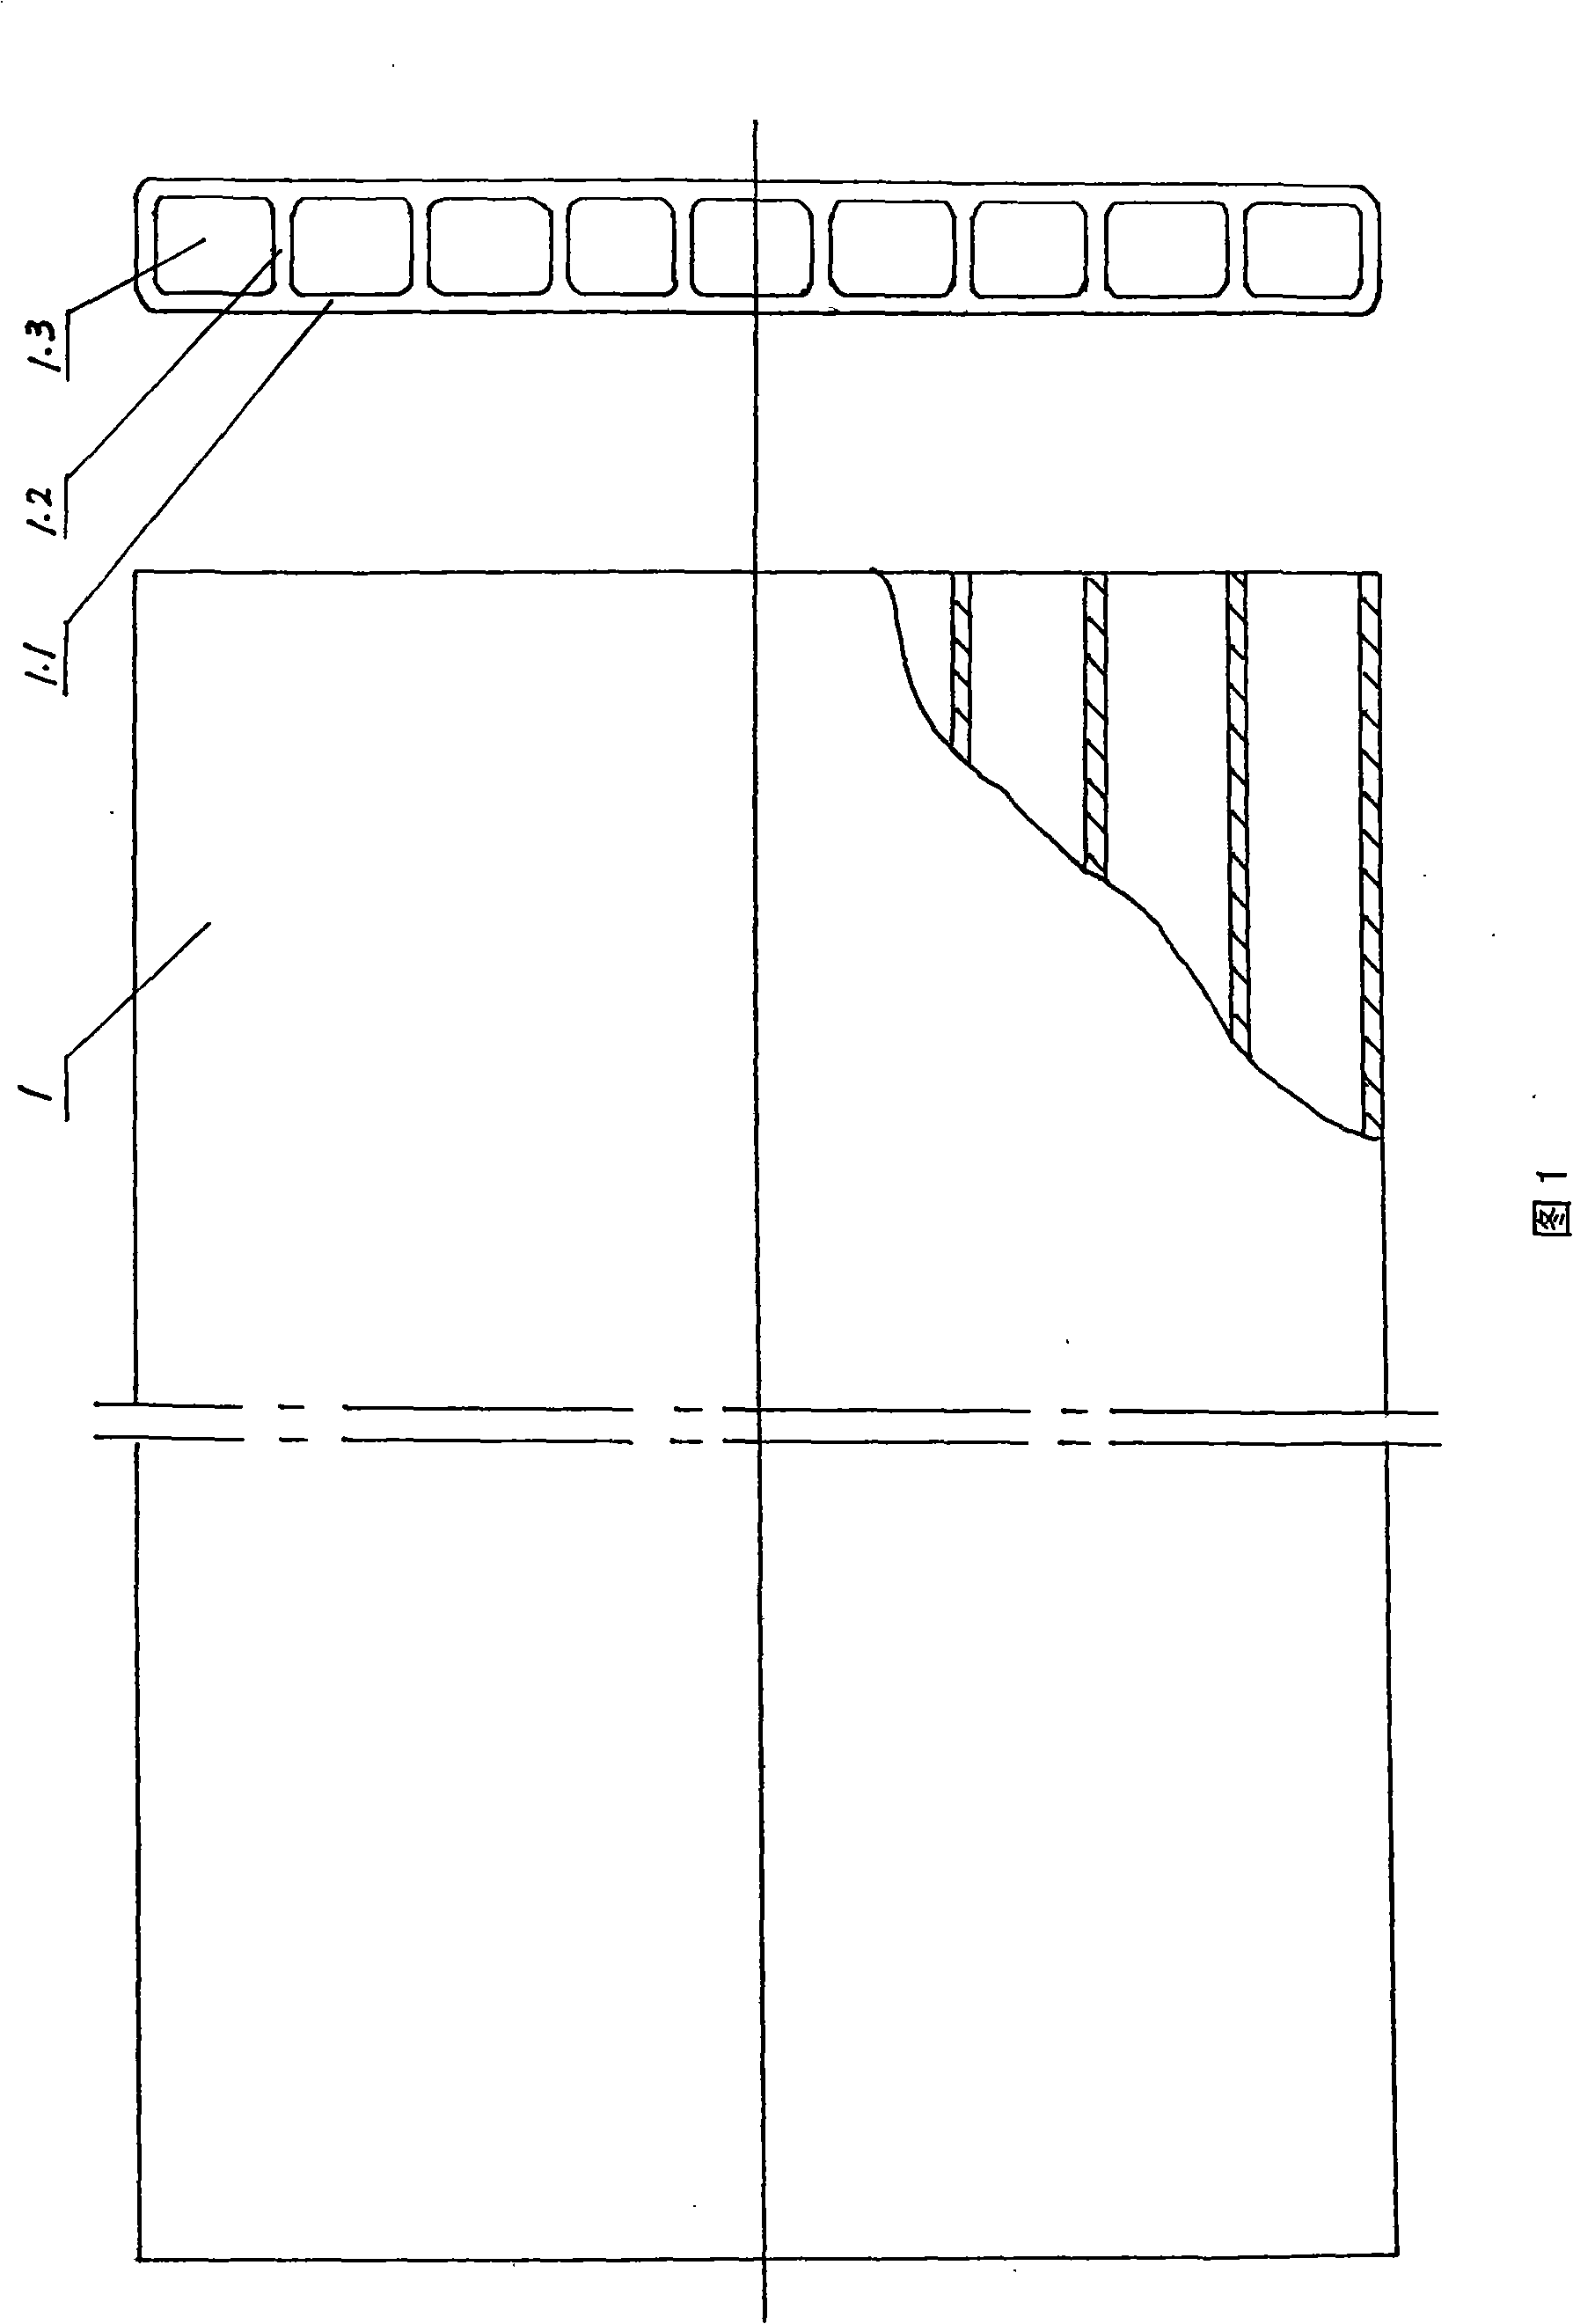 Seal connecting method of porous ceramic plate column